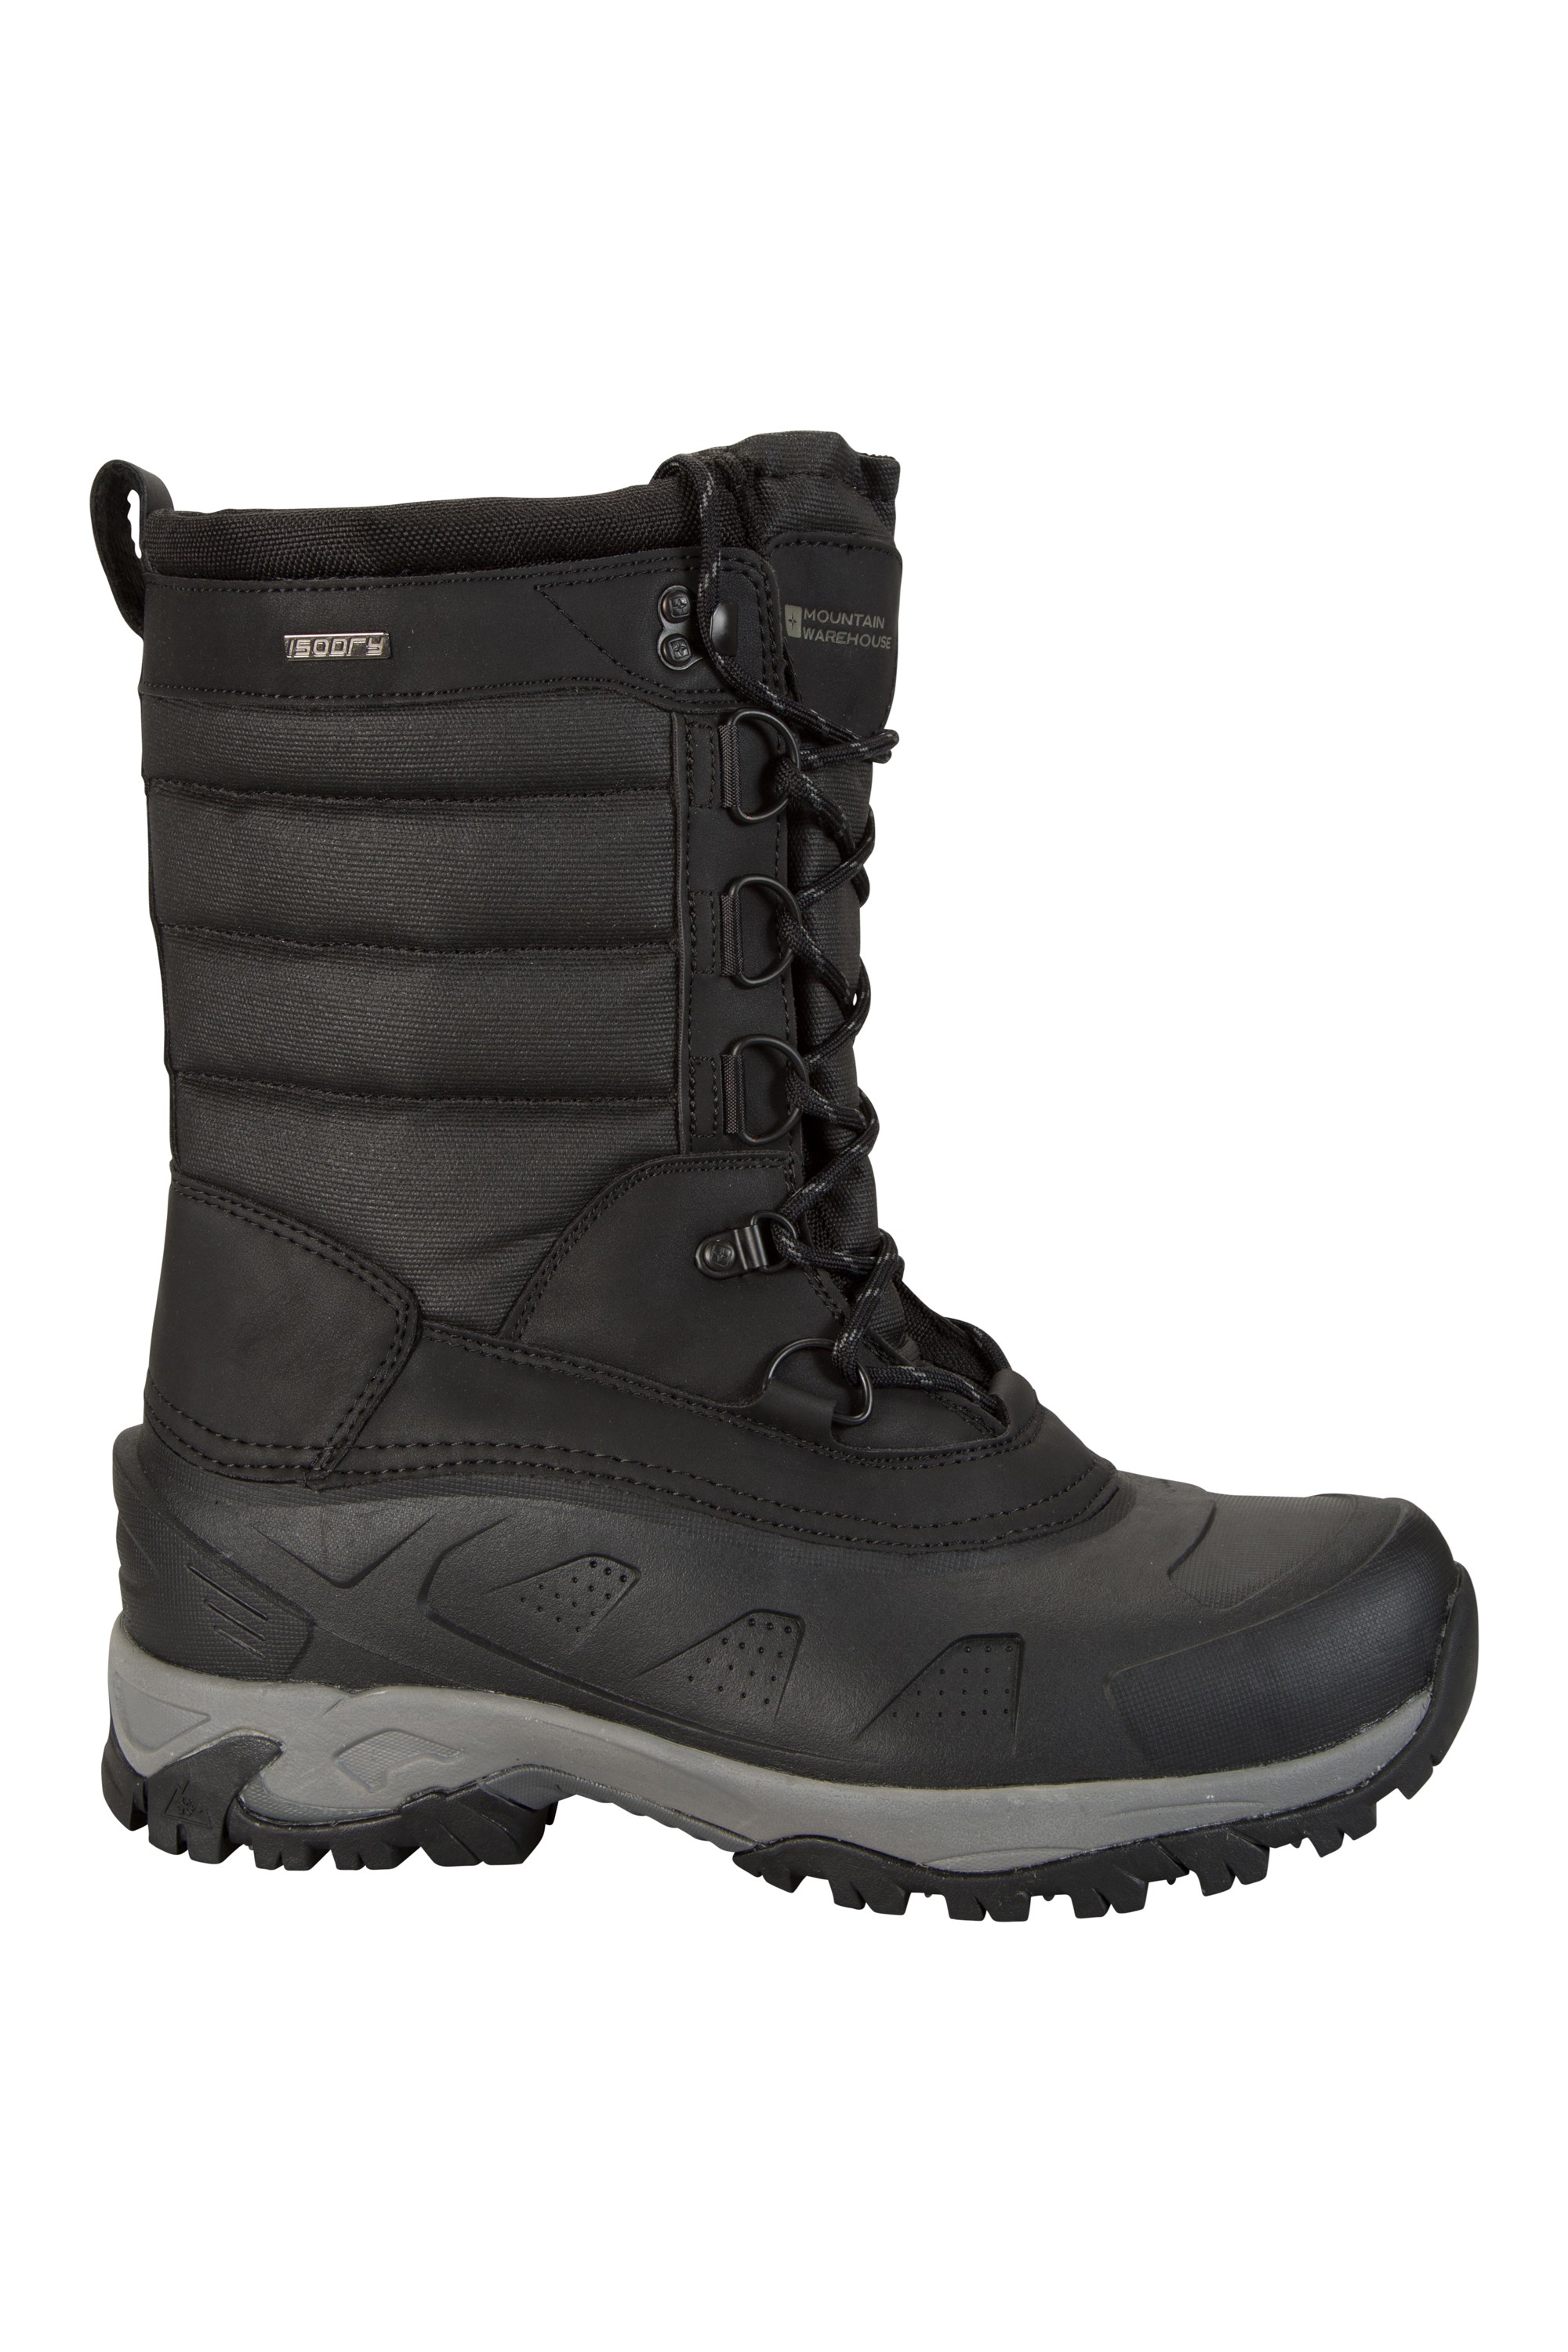 Mountain Warehouse Mountain Warehouse Range Waterproof Thermal Snow Boots Size UK 9 bnwt rrp £70 